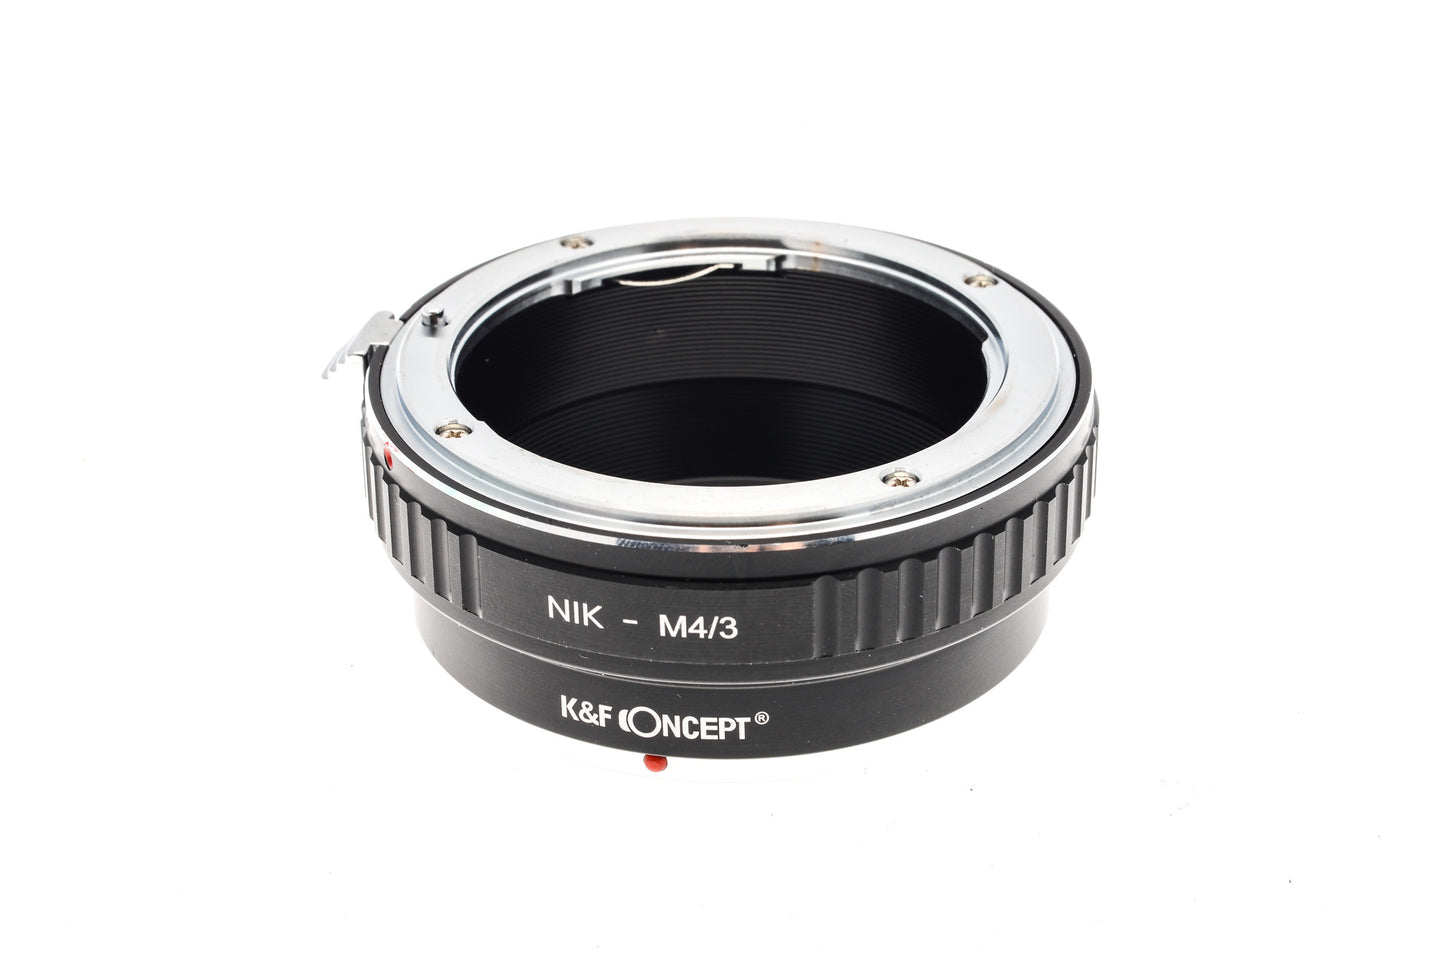 K&F Concept Nikon F - Micro Four Thirds - Lens Adapter